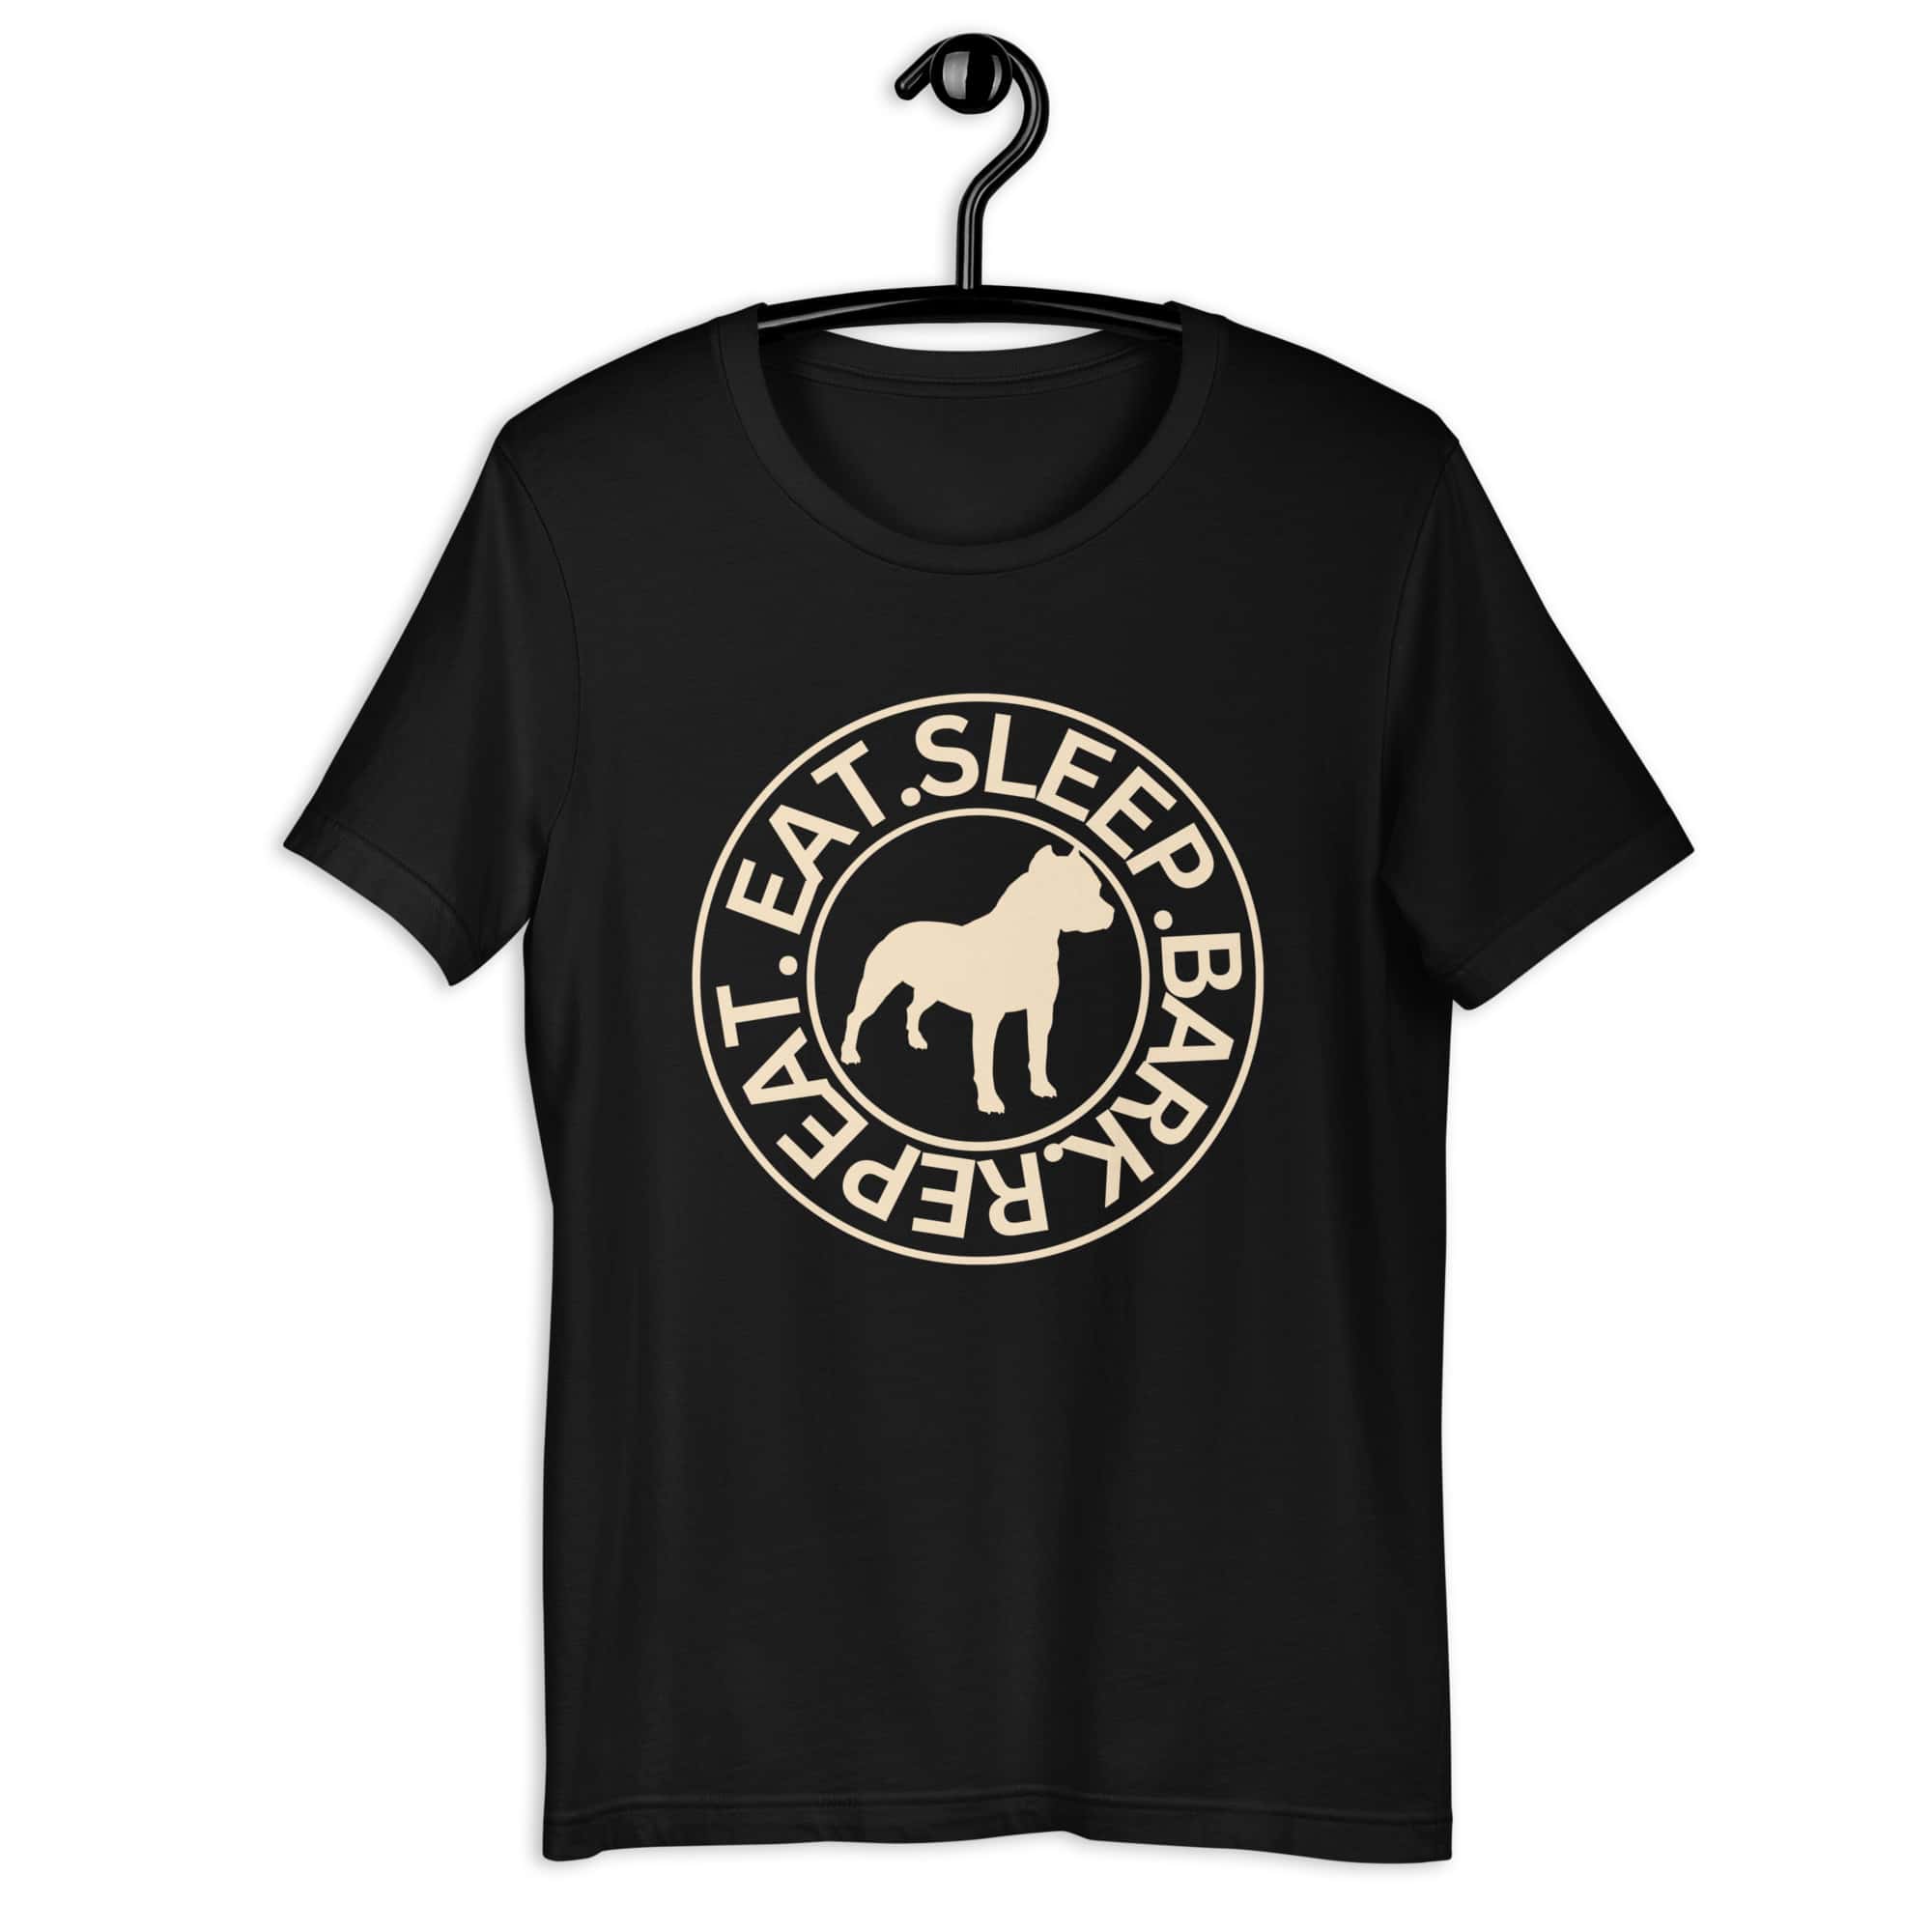 Eat Sleep Bark Repeat Toy Bulldog Unisex T-Shirt. Black